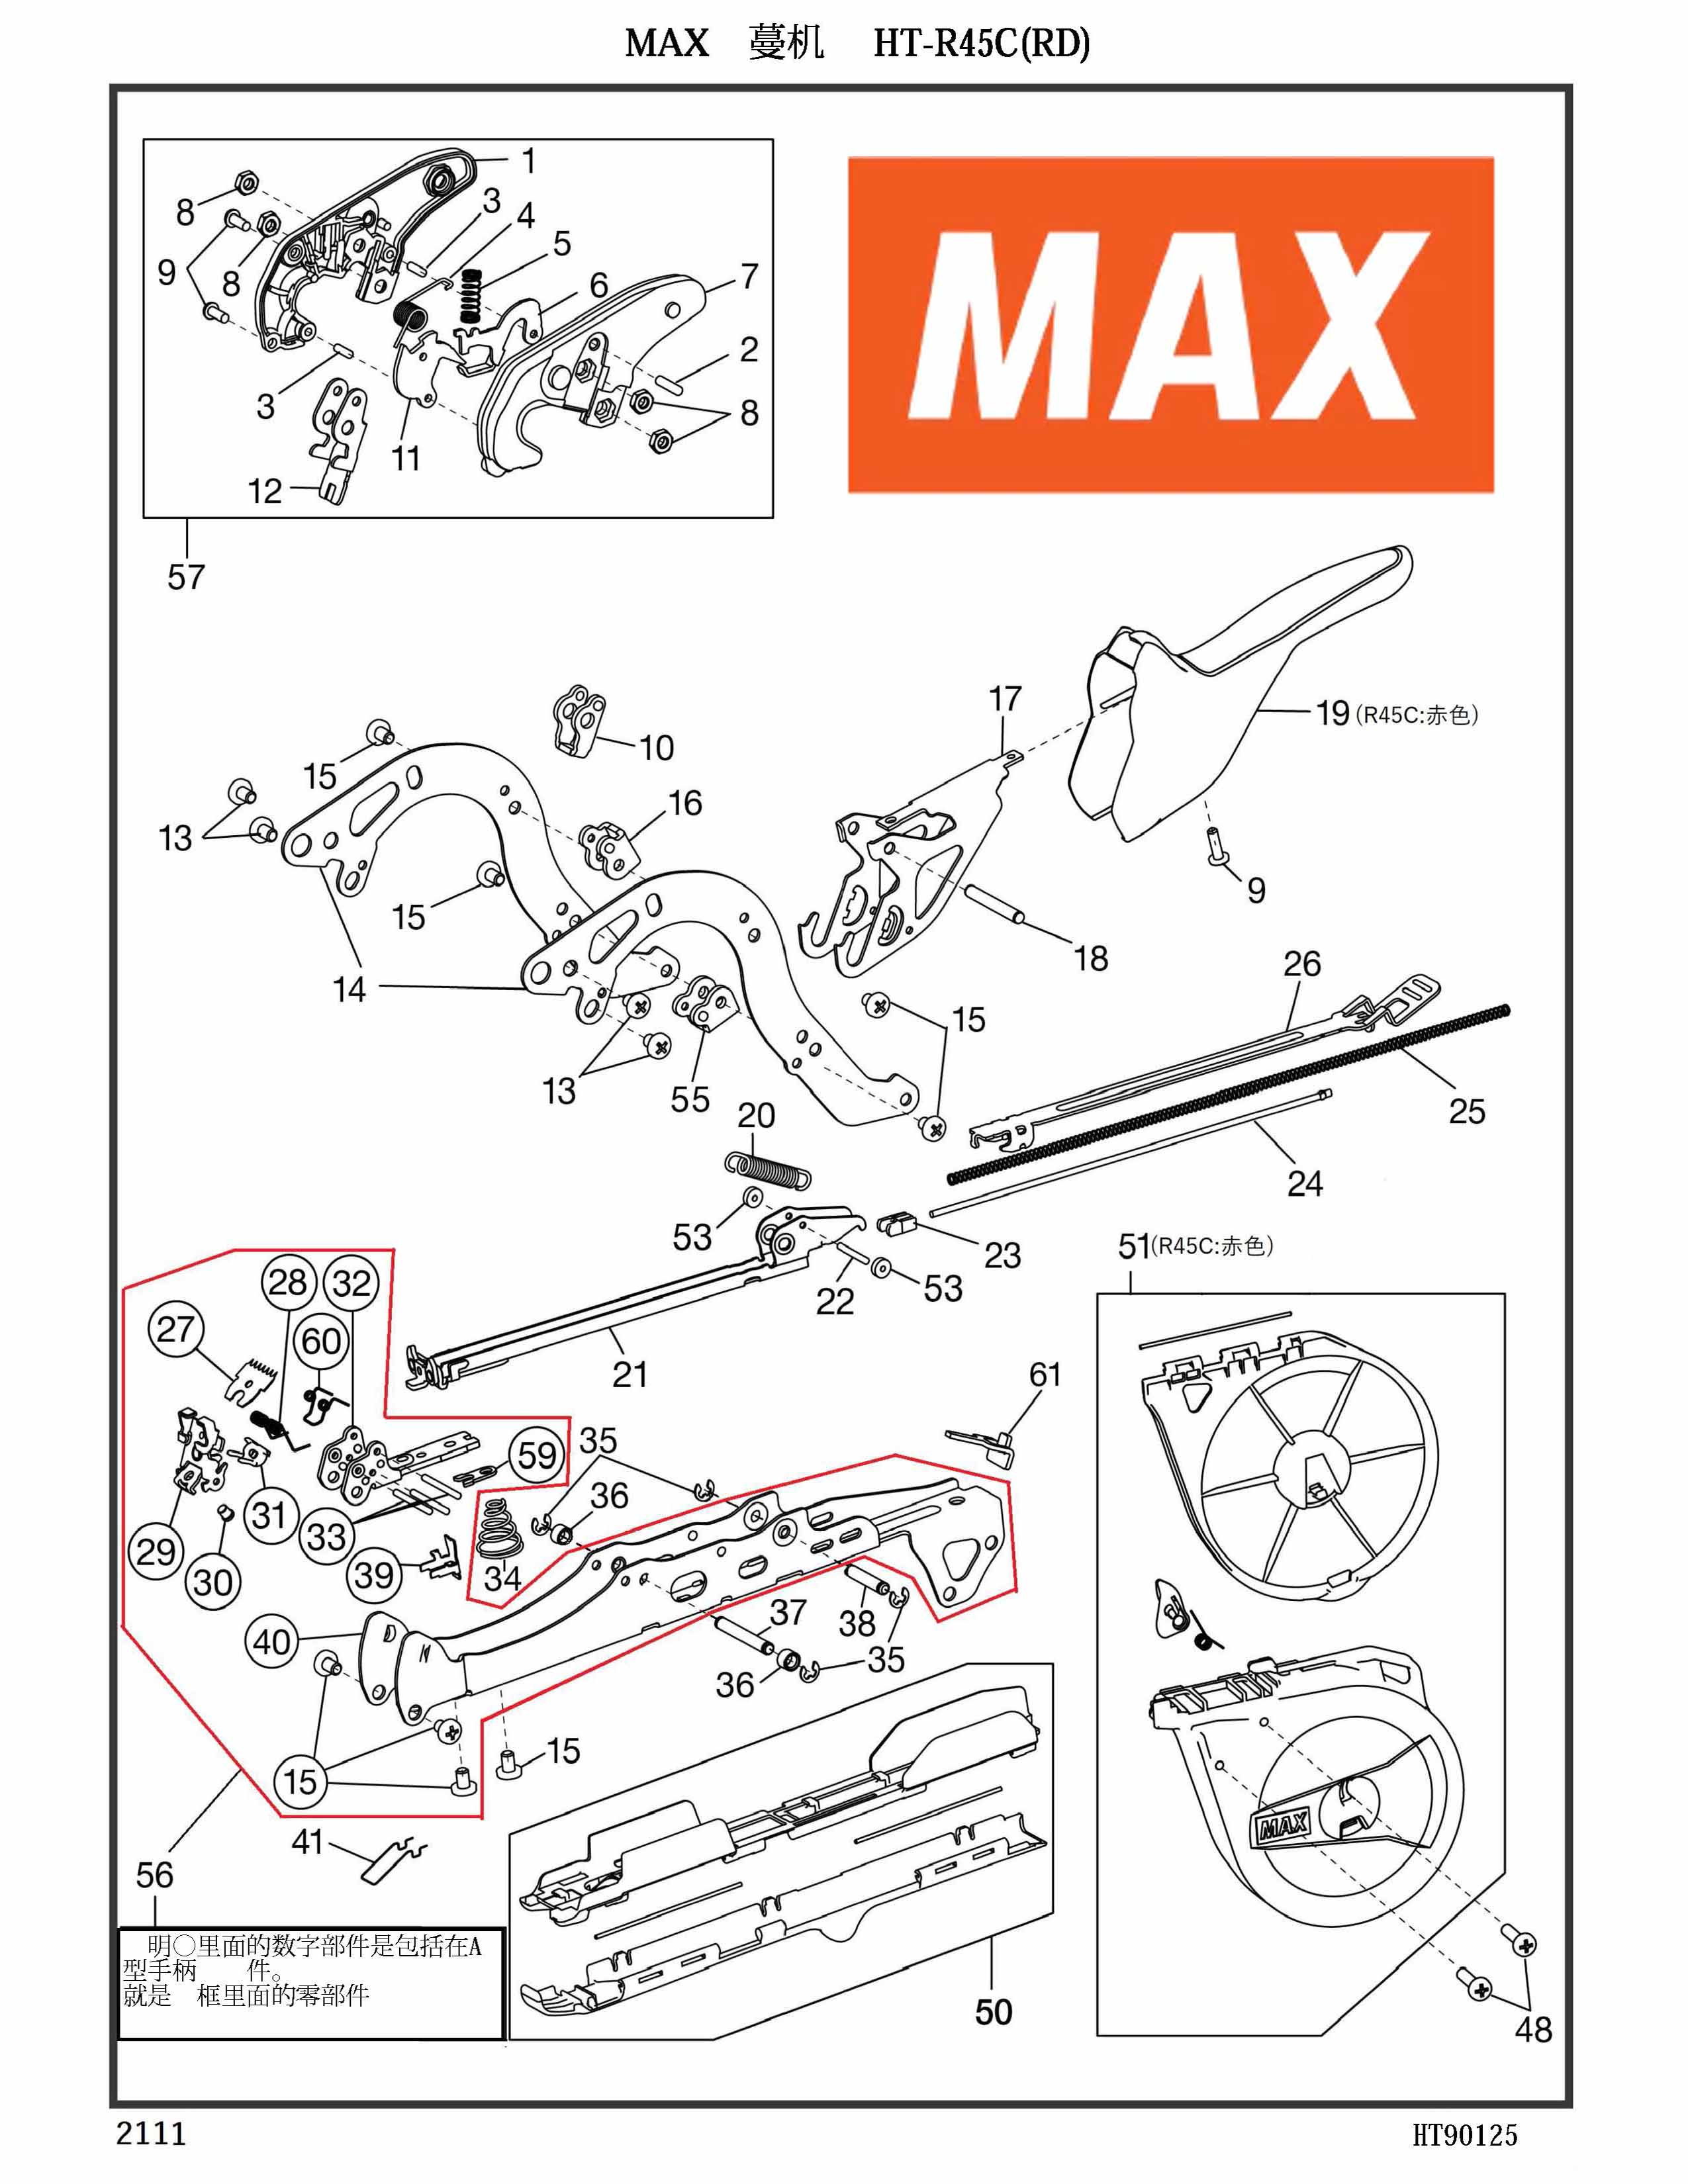 MAX Tapener Part KK34101 TORSION SPRING 4101 Fits MAX HT-R45L(O) R45C(RD) HT-S45E #60